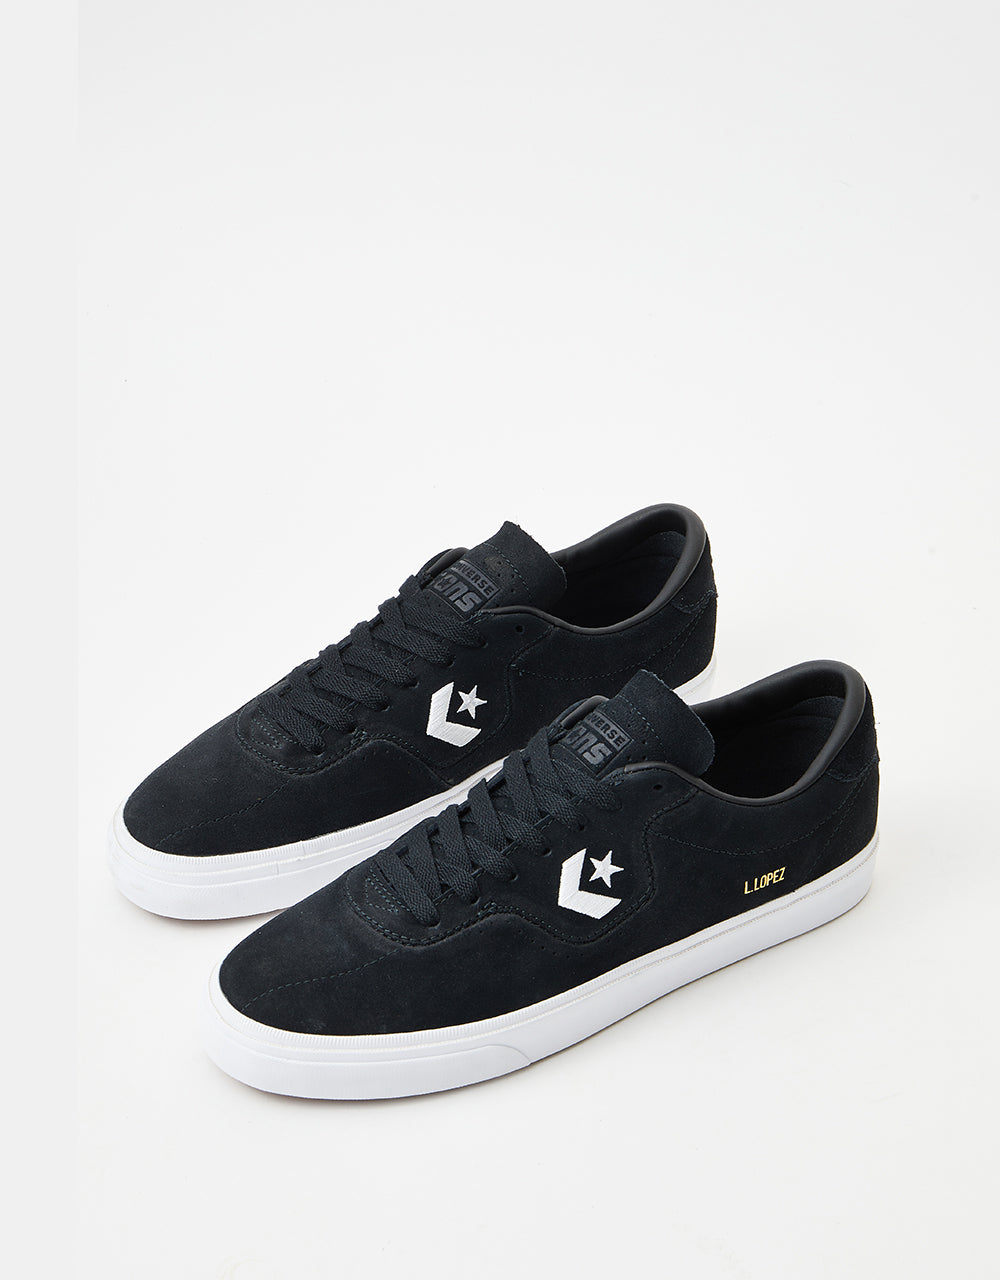 Converse Louie Lopez Pro Ox Skate Shoes - Black/Black/White